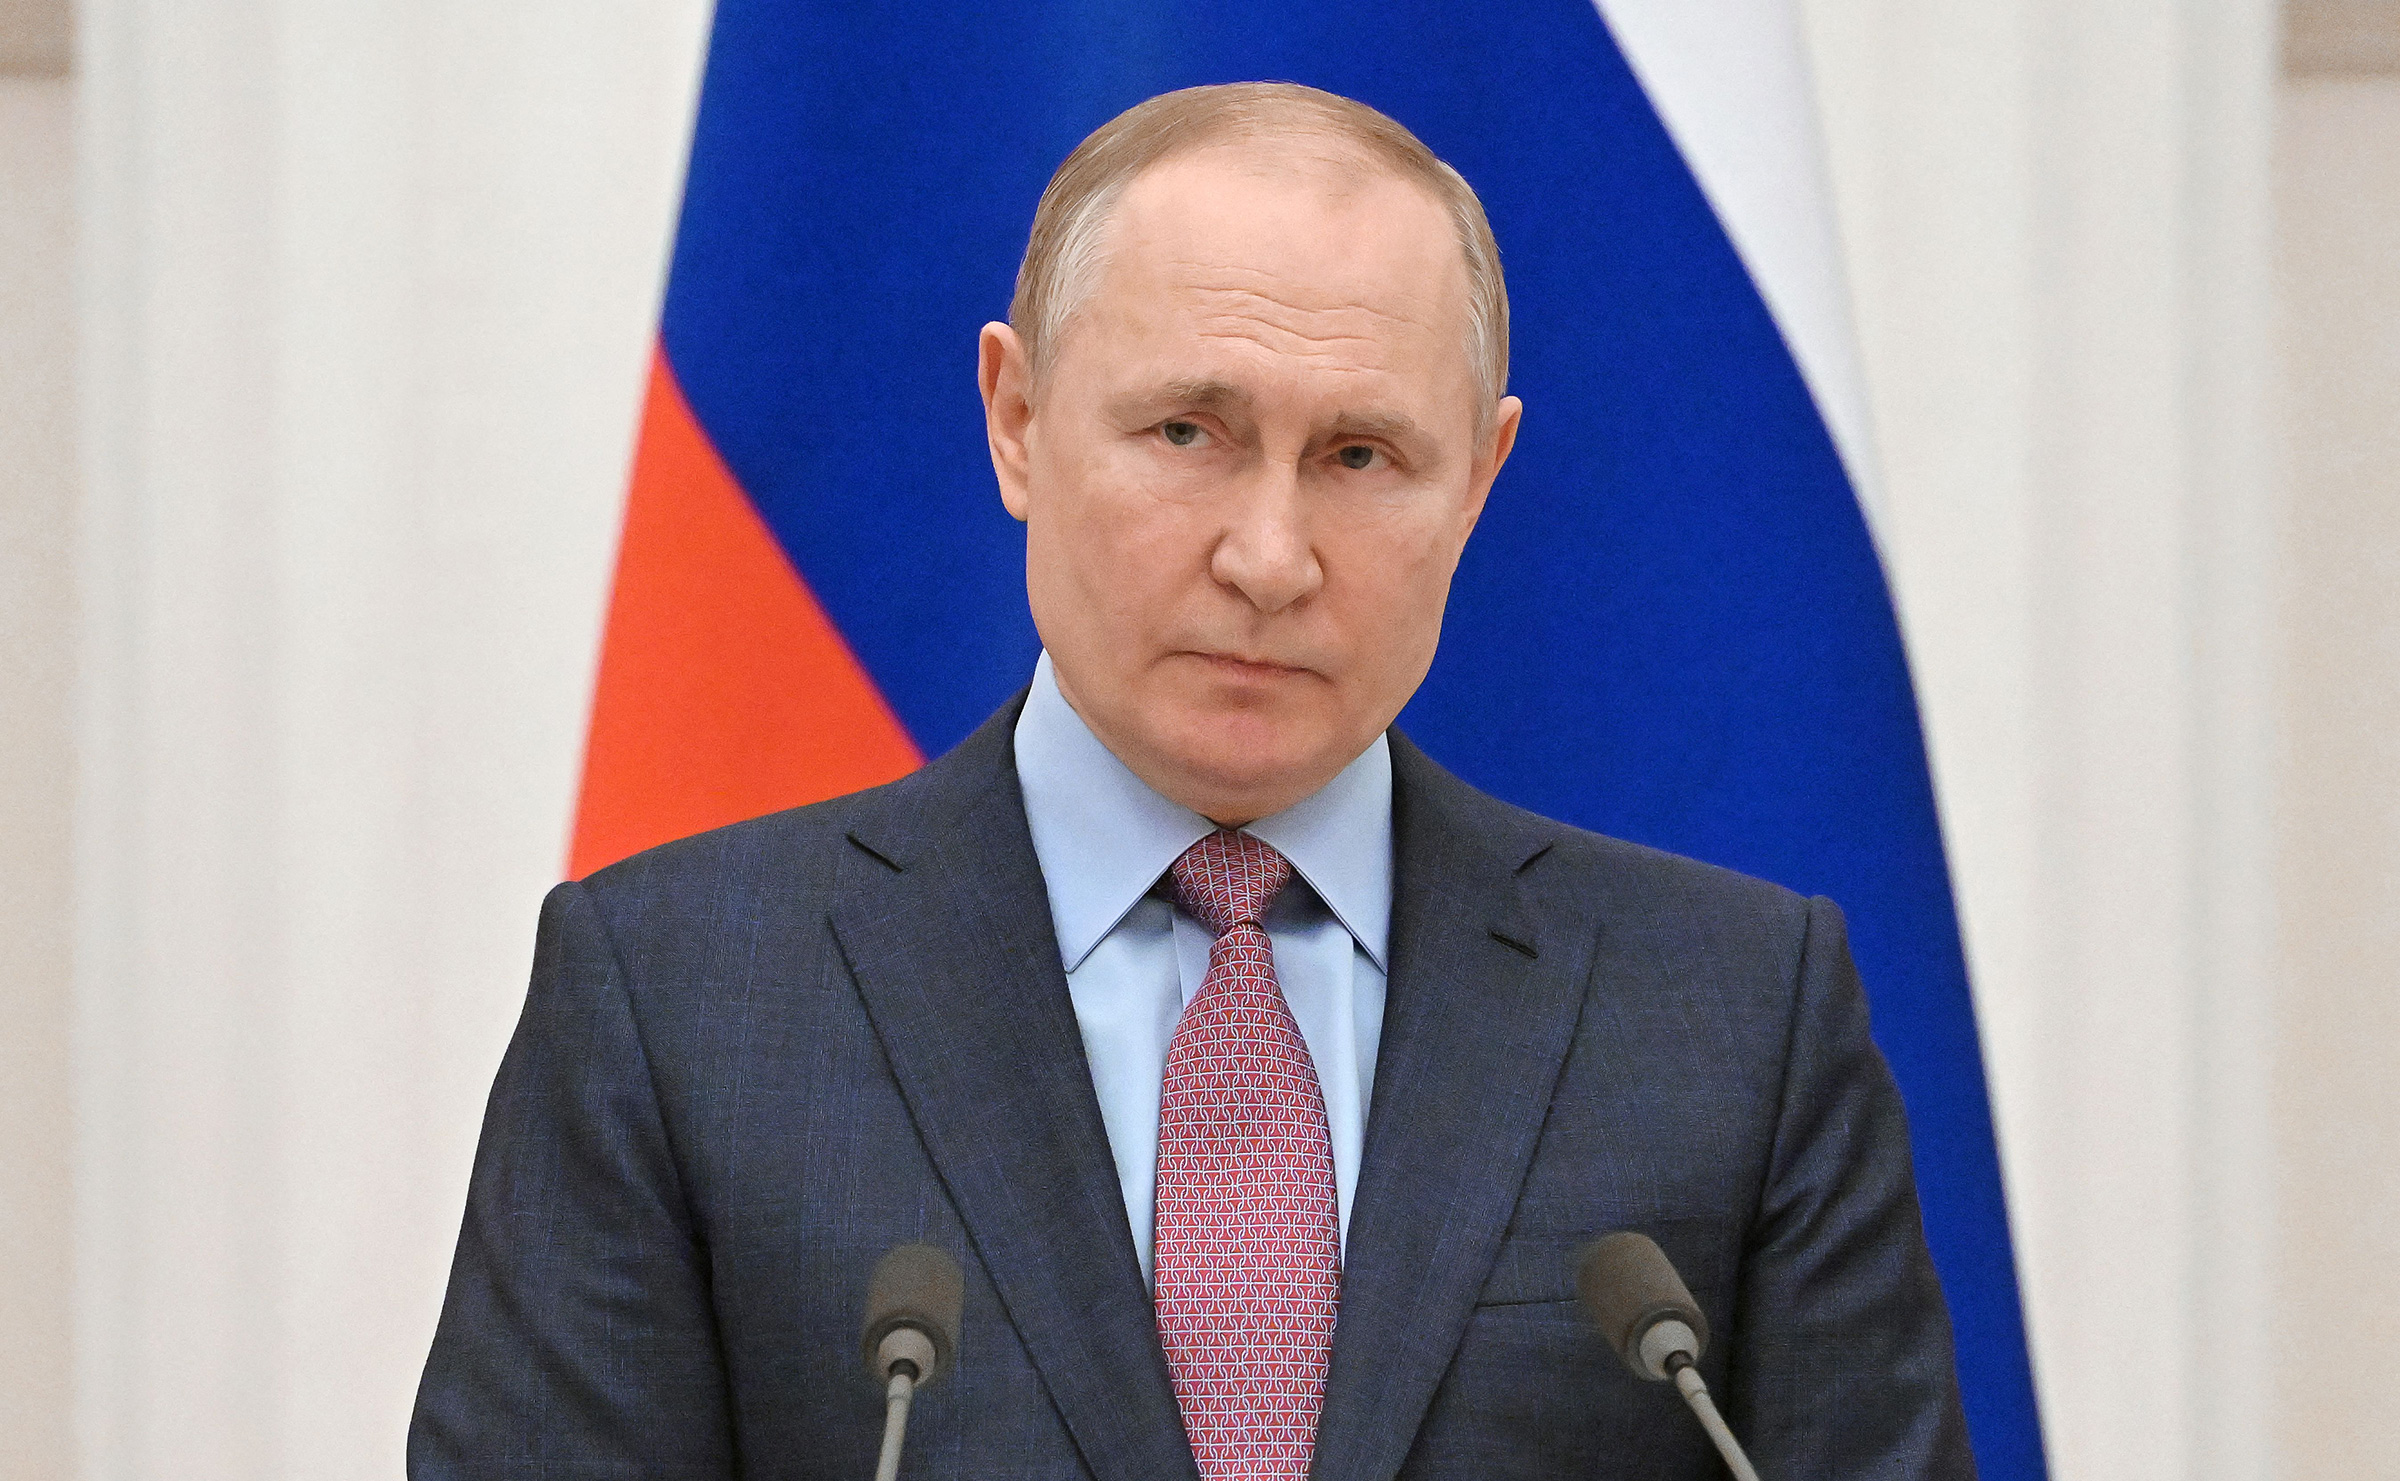 President Vladimir Putin attends a press conference at the Kremlin in Moscow on Feb. 18, 2022. (Sergei Guneyev—Sputnik/AFP/Getty Images)